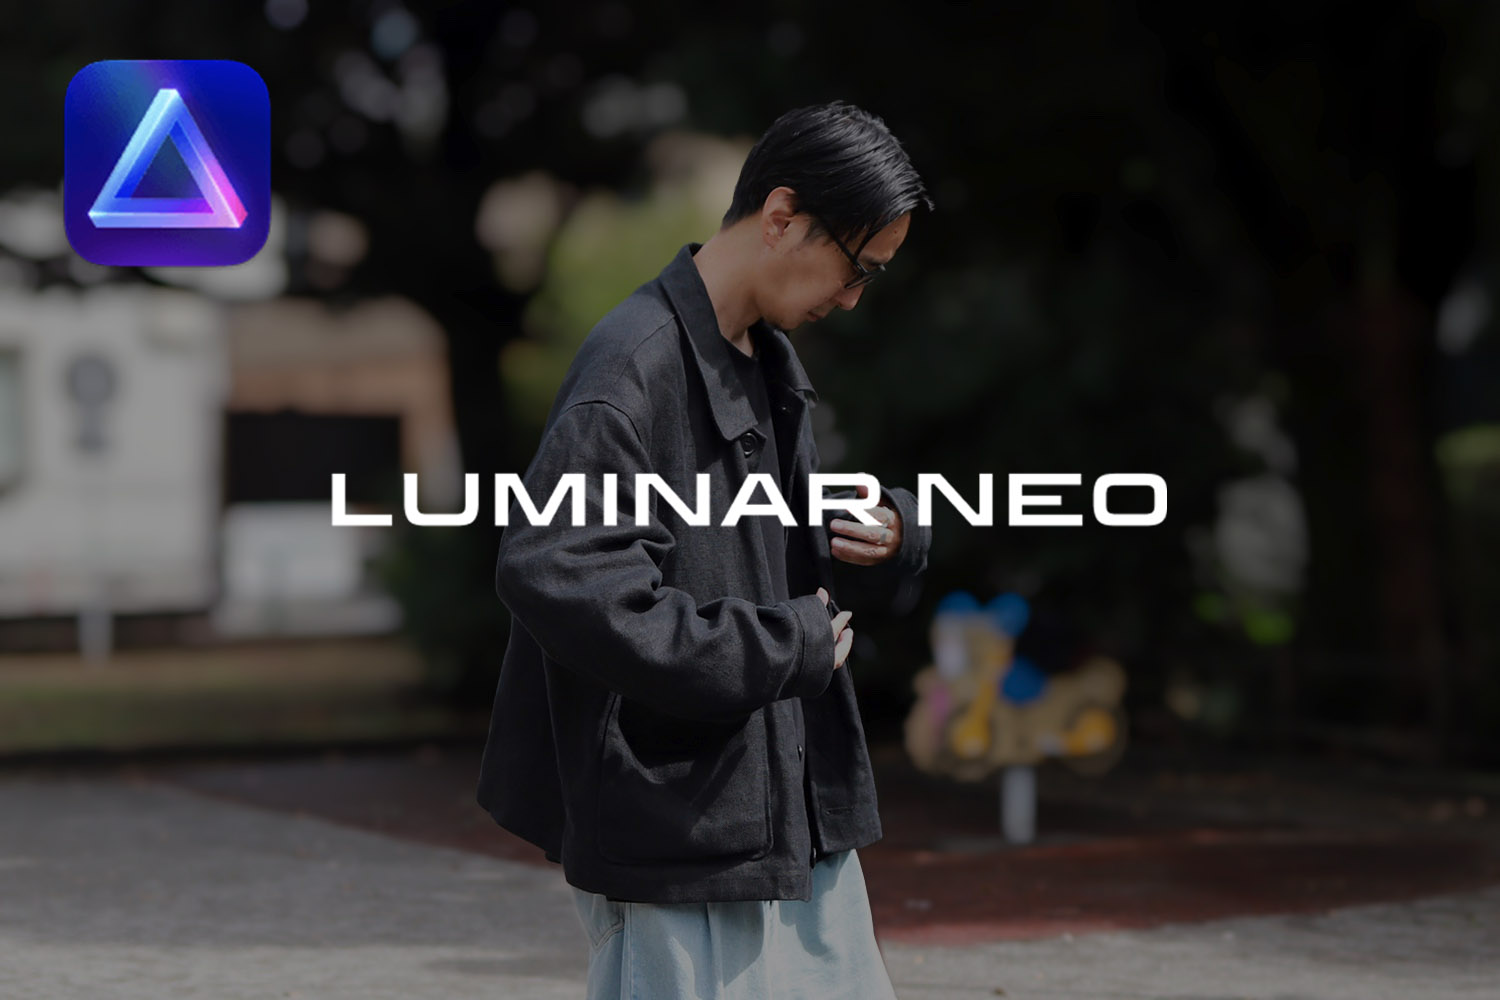 「Luminar Neo」のポートレートボケAI機能で人物写真の背景を超簡単にボカして補正する方法